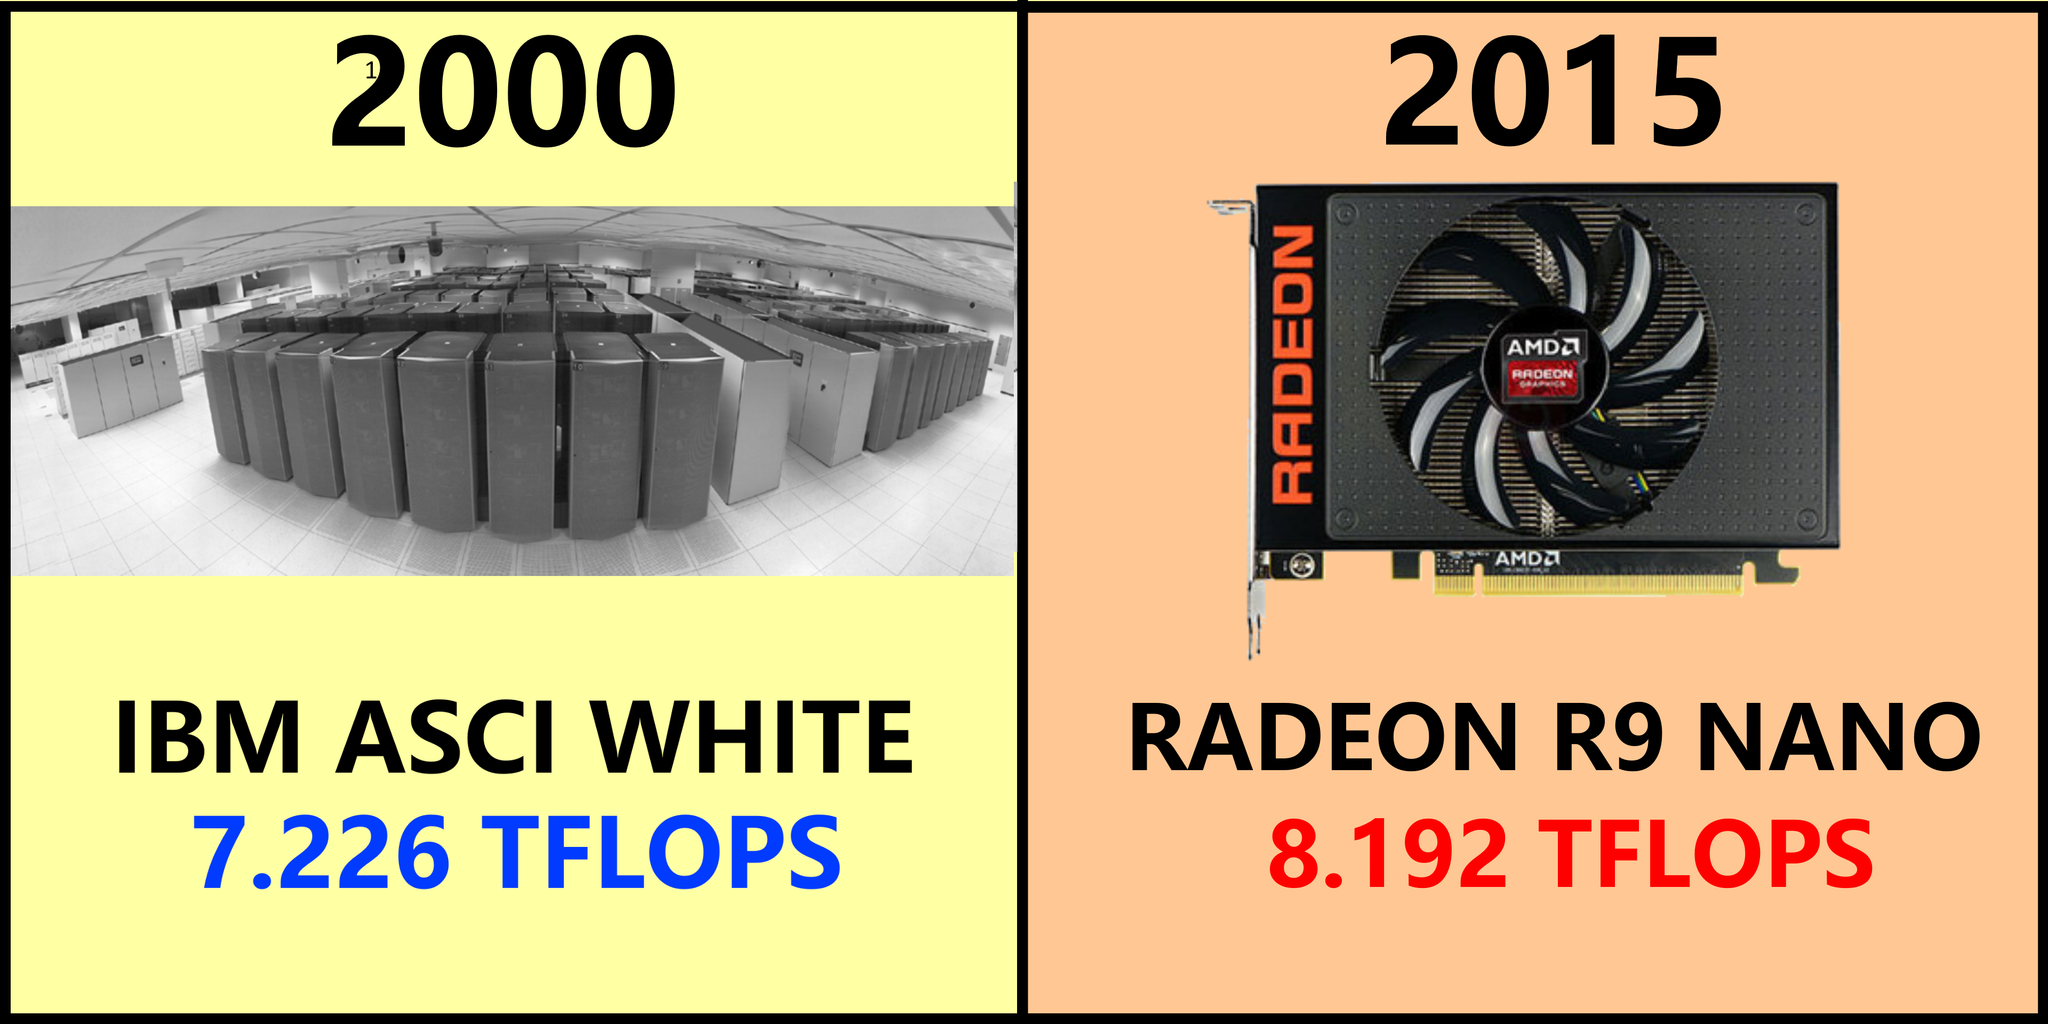 Progress over 15 years - My, AMD, Radeon, Ibm, Computer, Iron, AMD Radeon